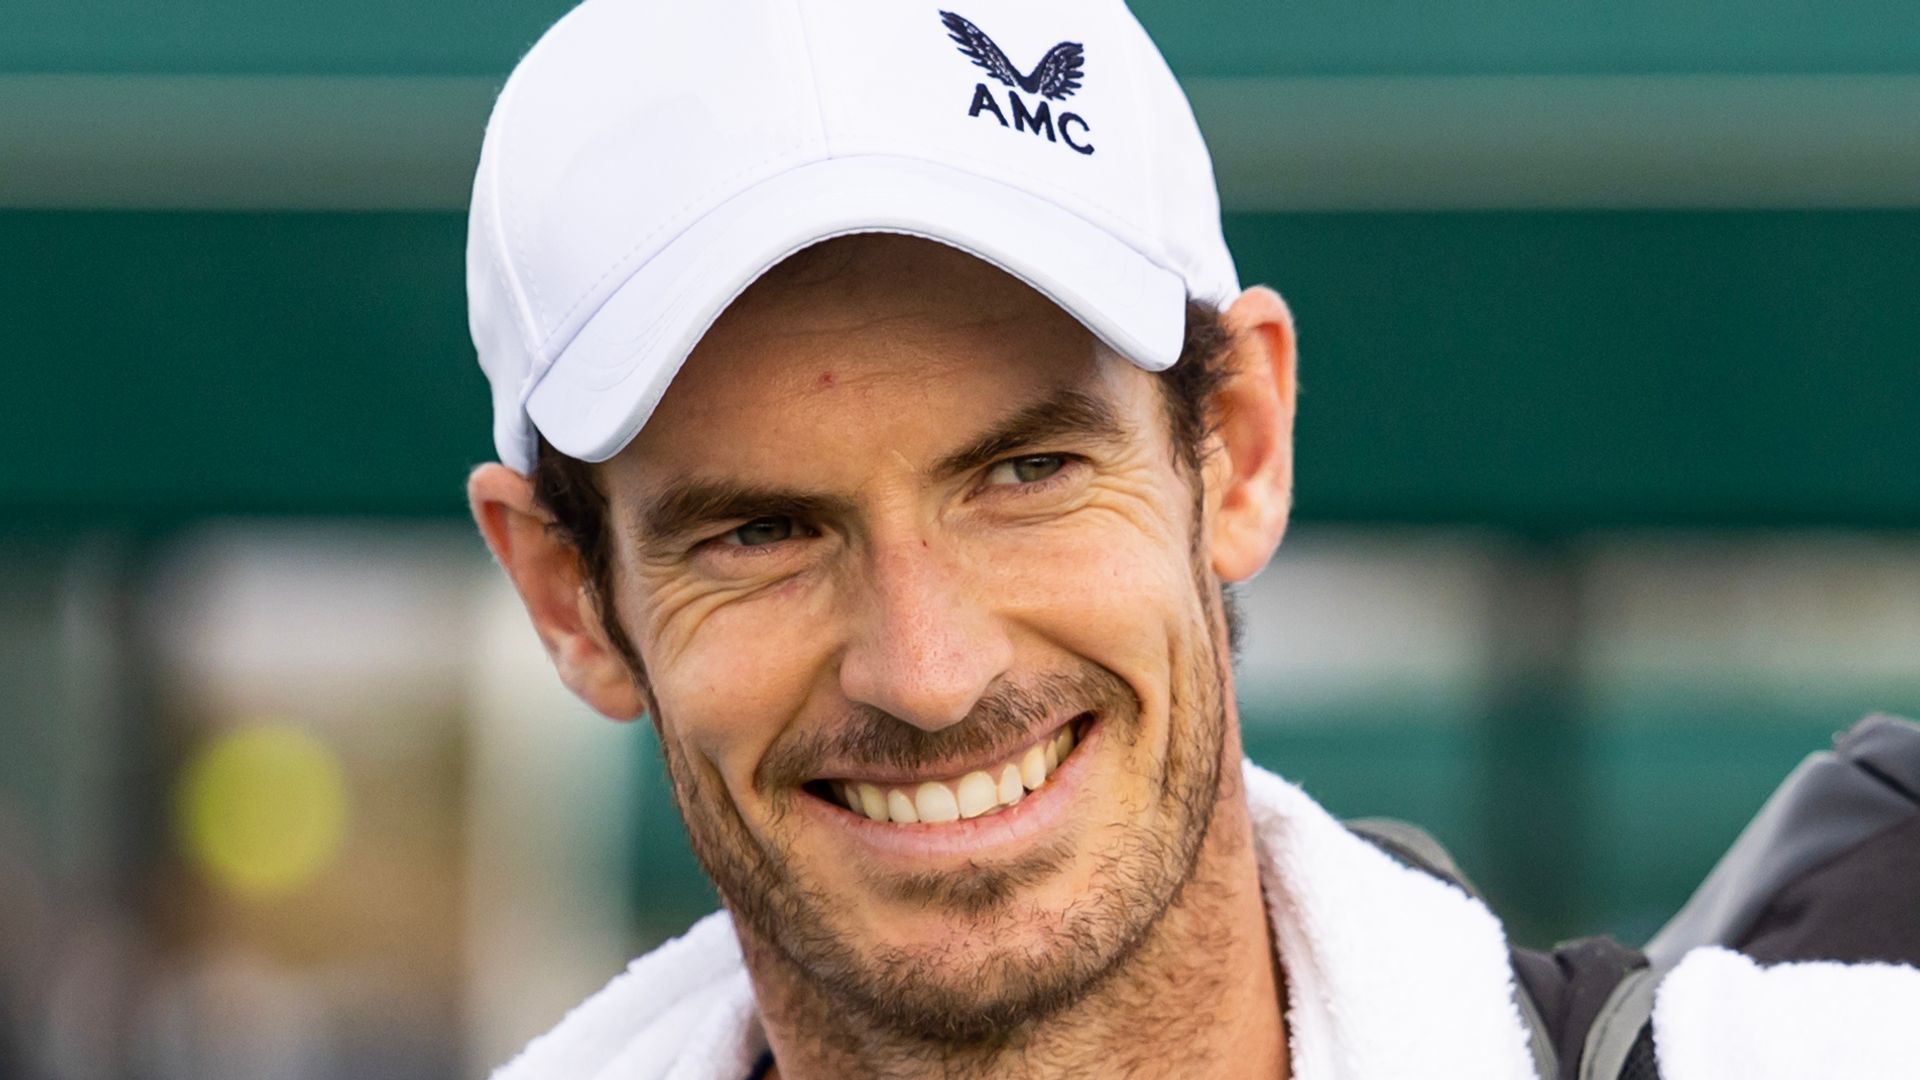 Andy Murray wearing a white baseball cap 